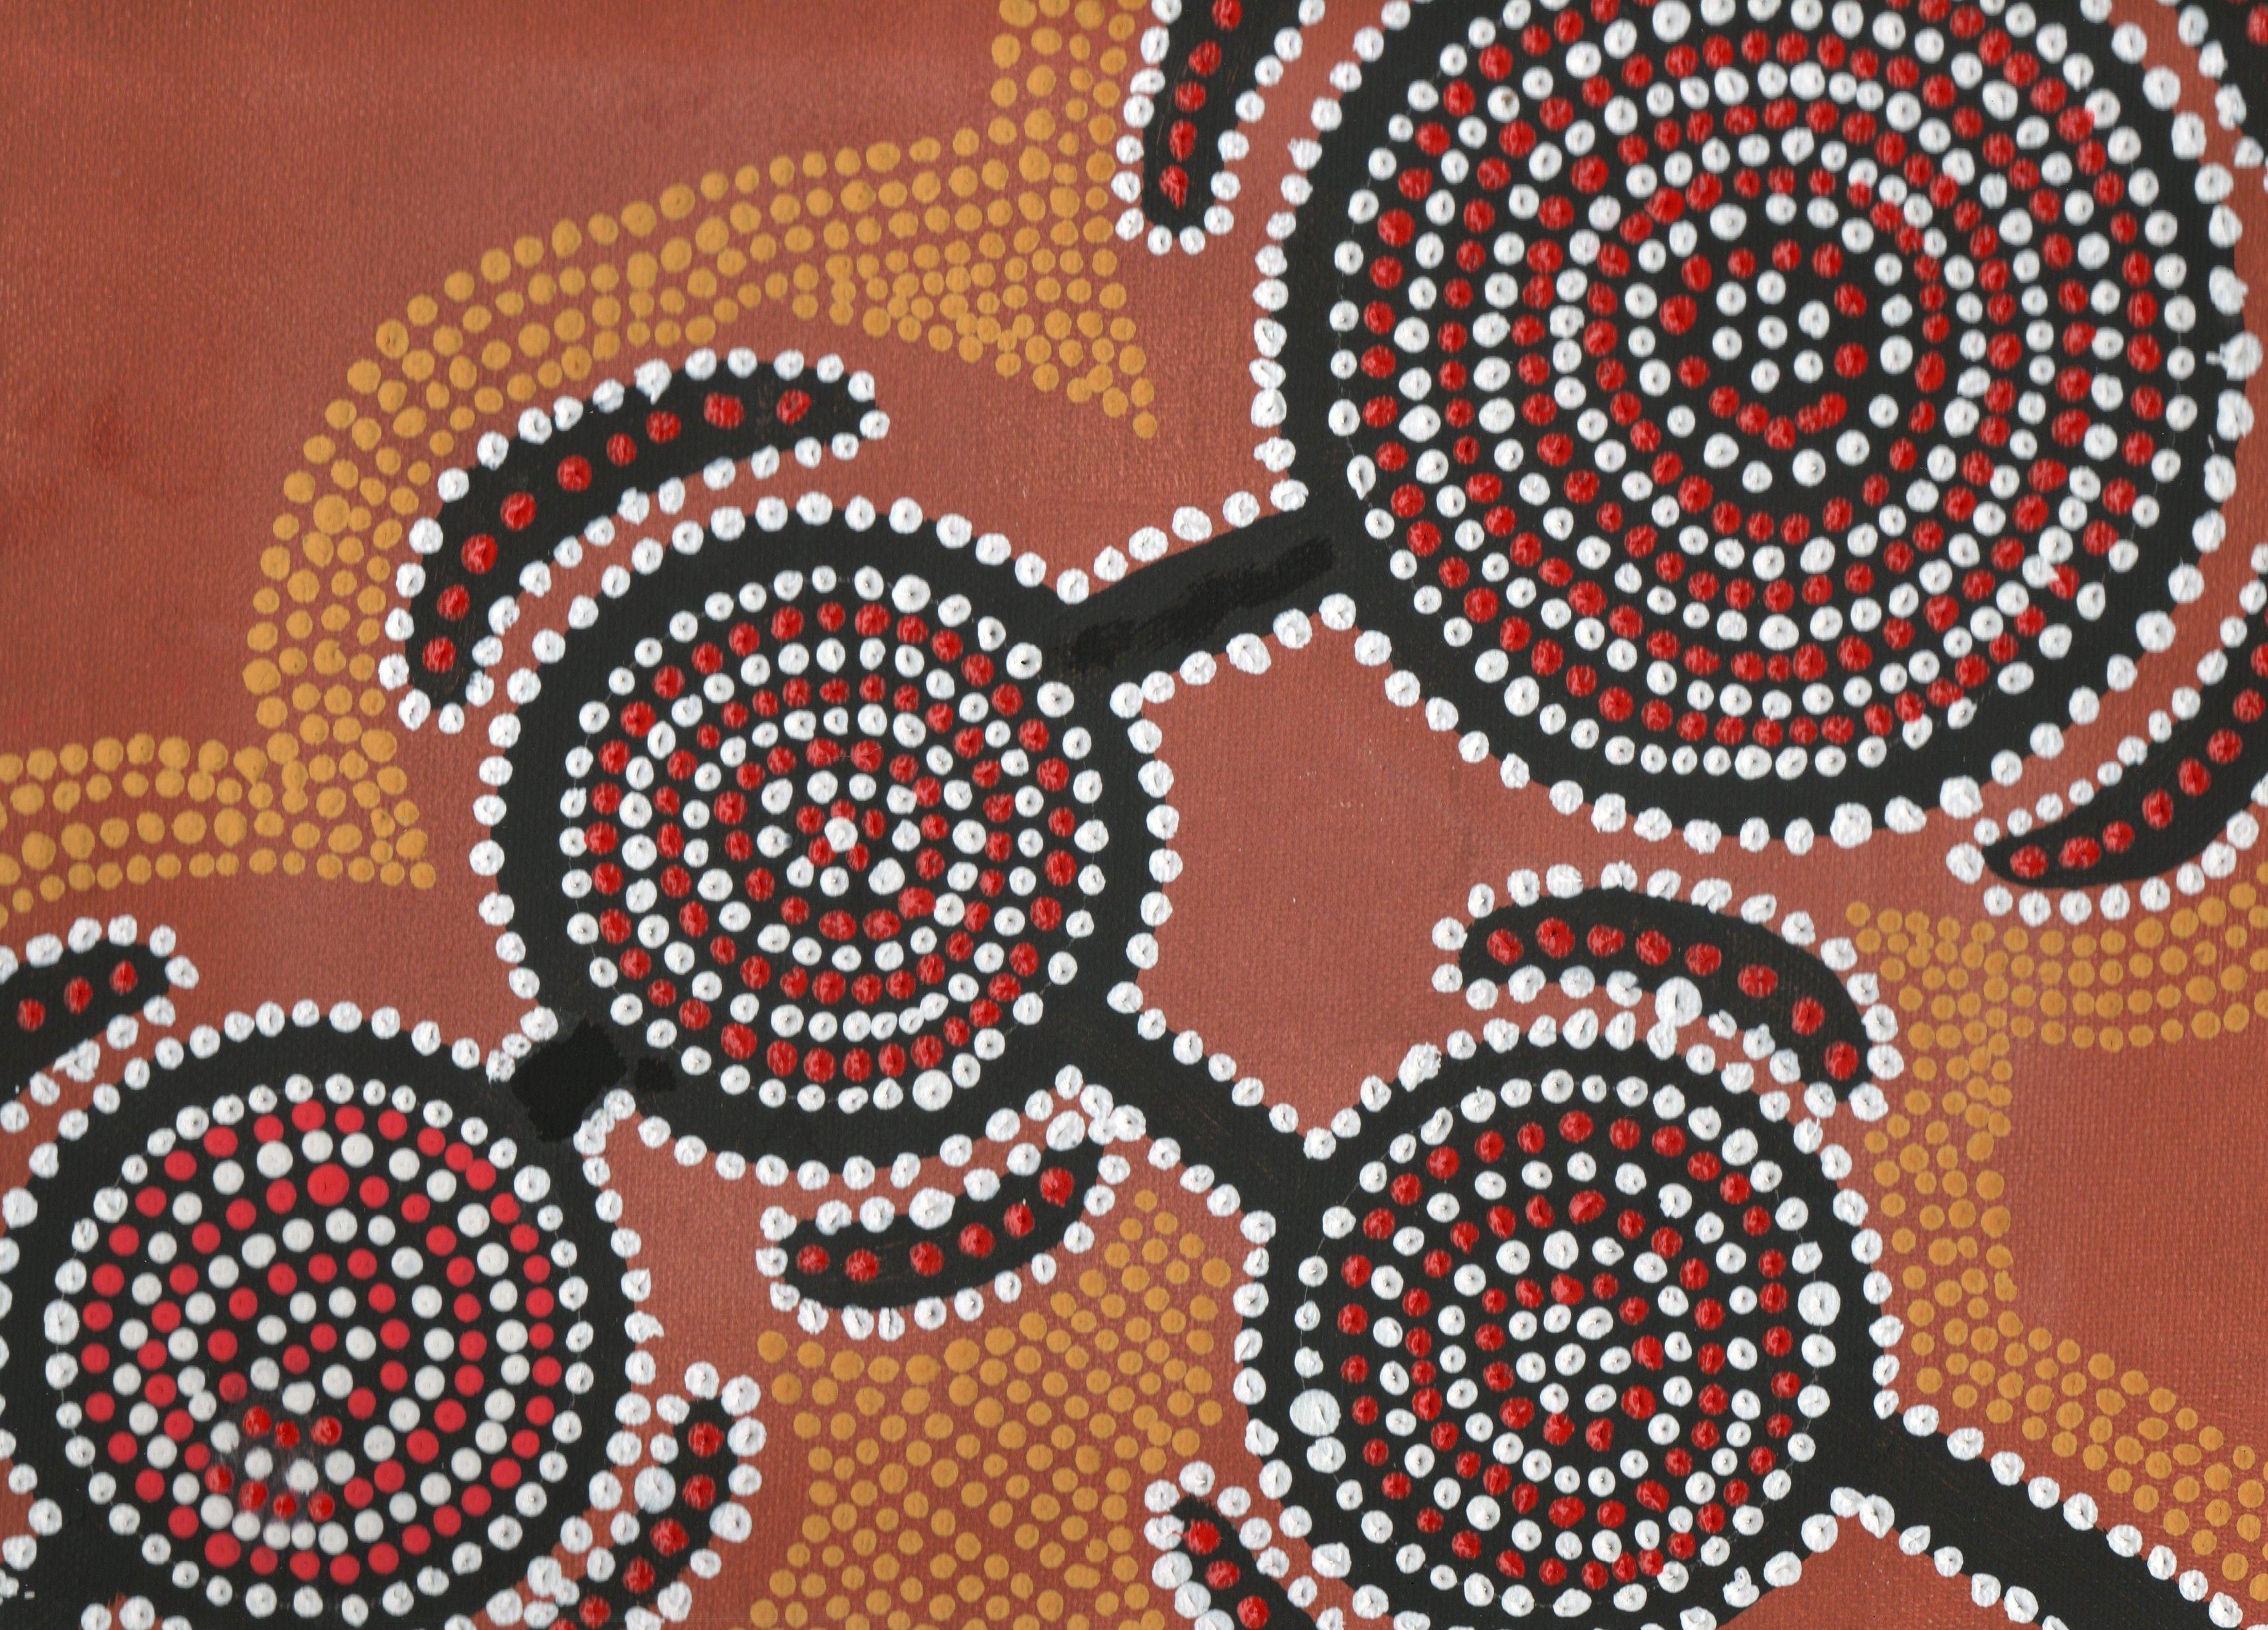 Australian Aboriginal Dot Painting Symbols - Printable Templates Free